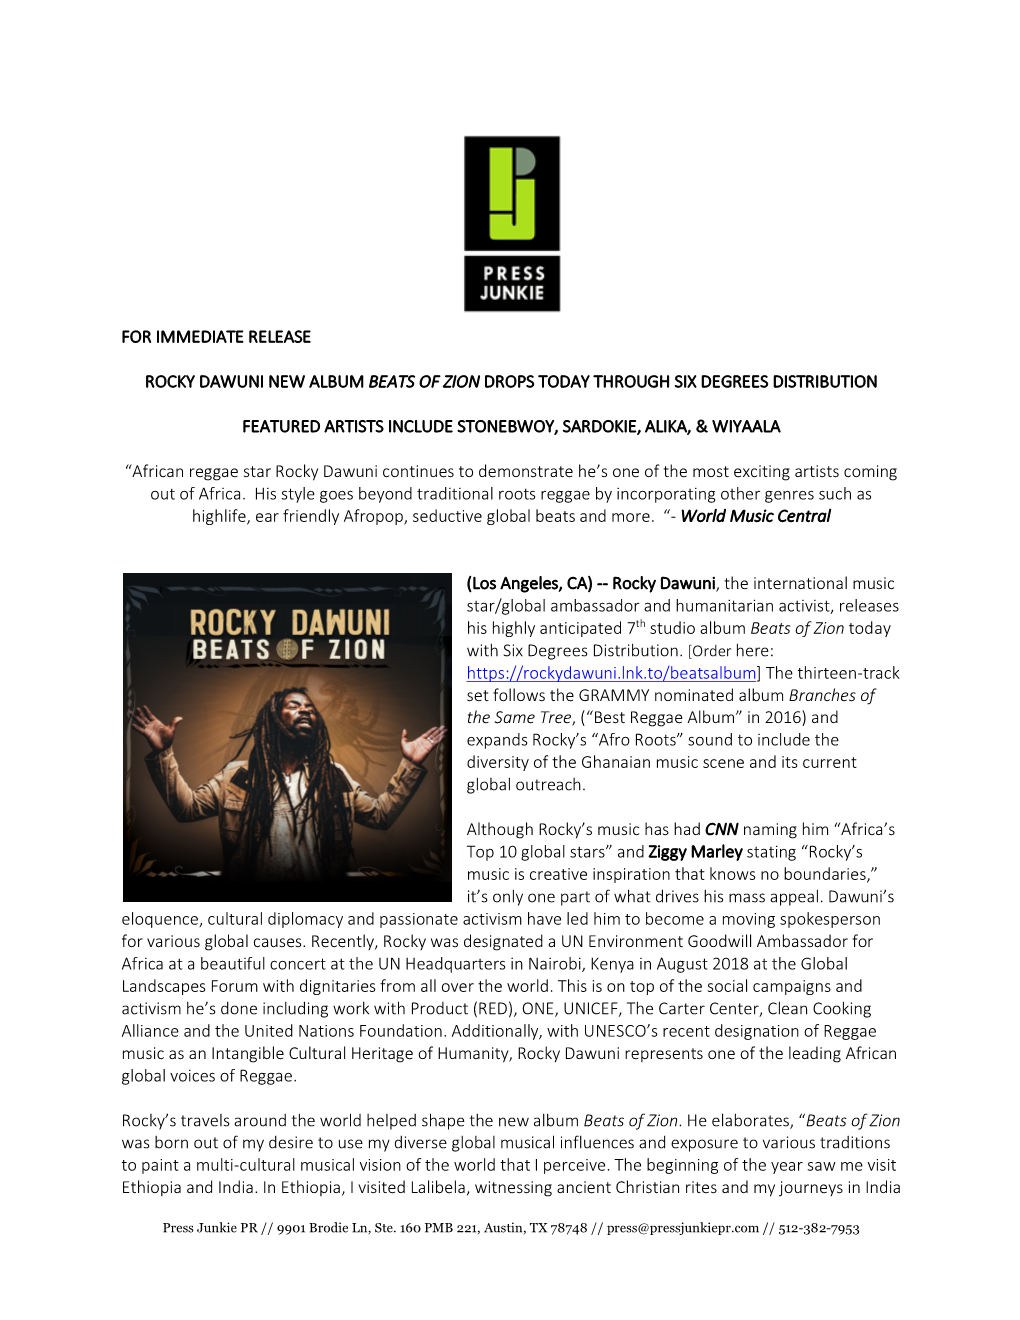 For Immediate Release Rocky Dawuni New Album Beats Of